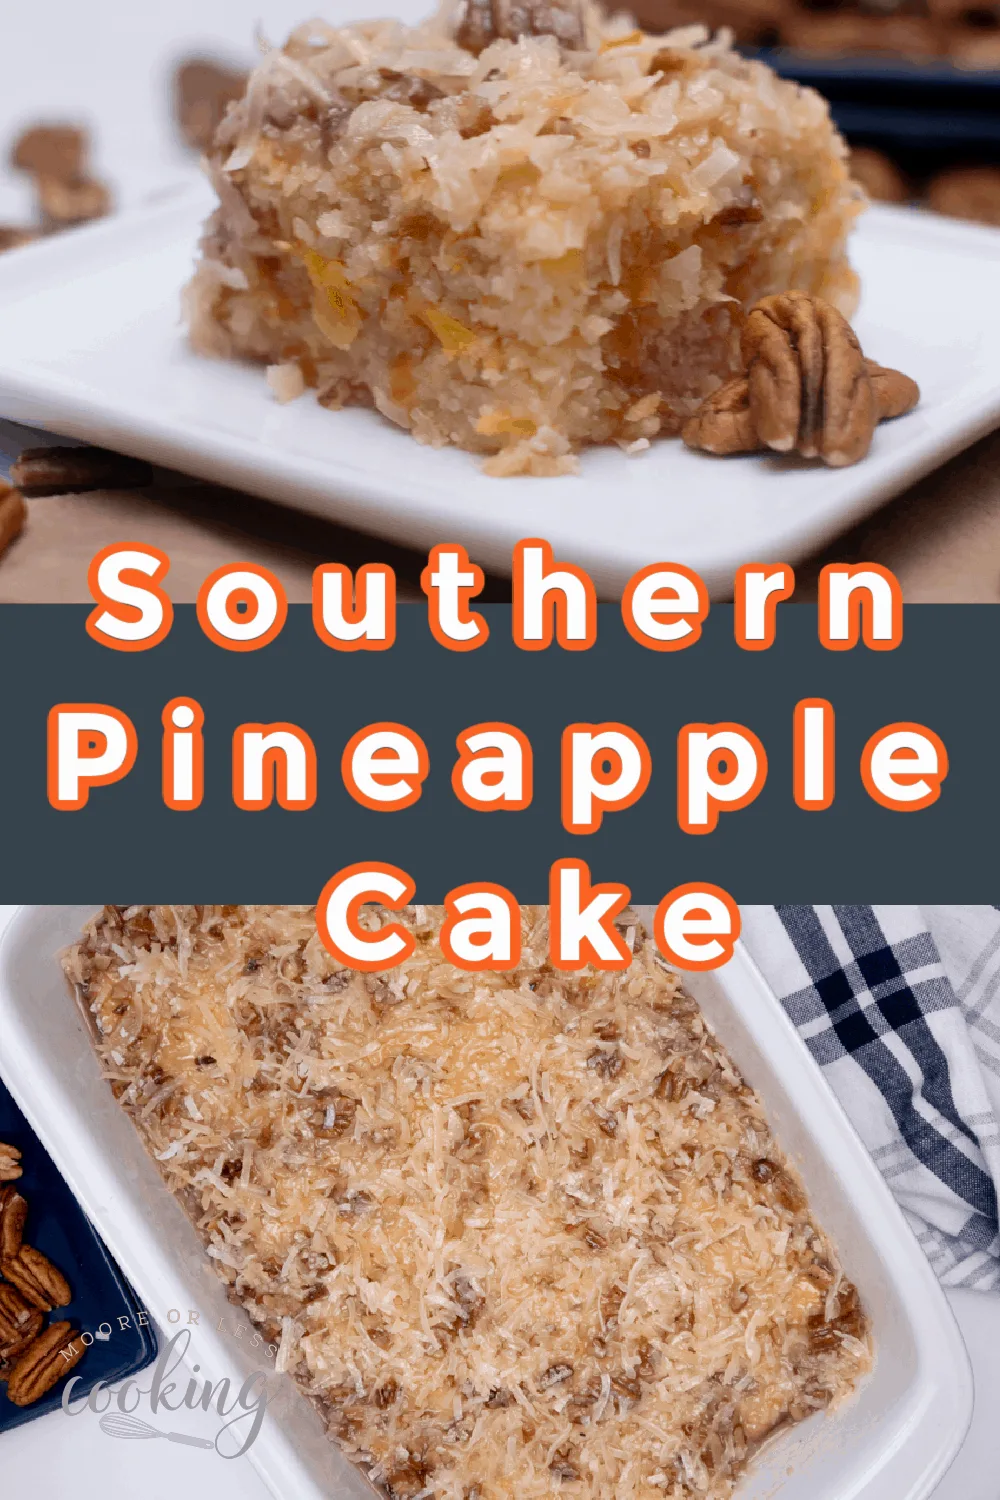 Pin southern Pineapple Cake